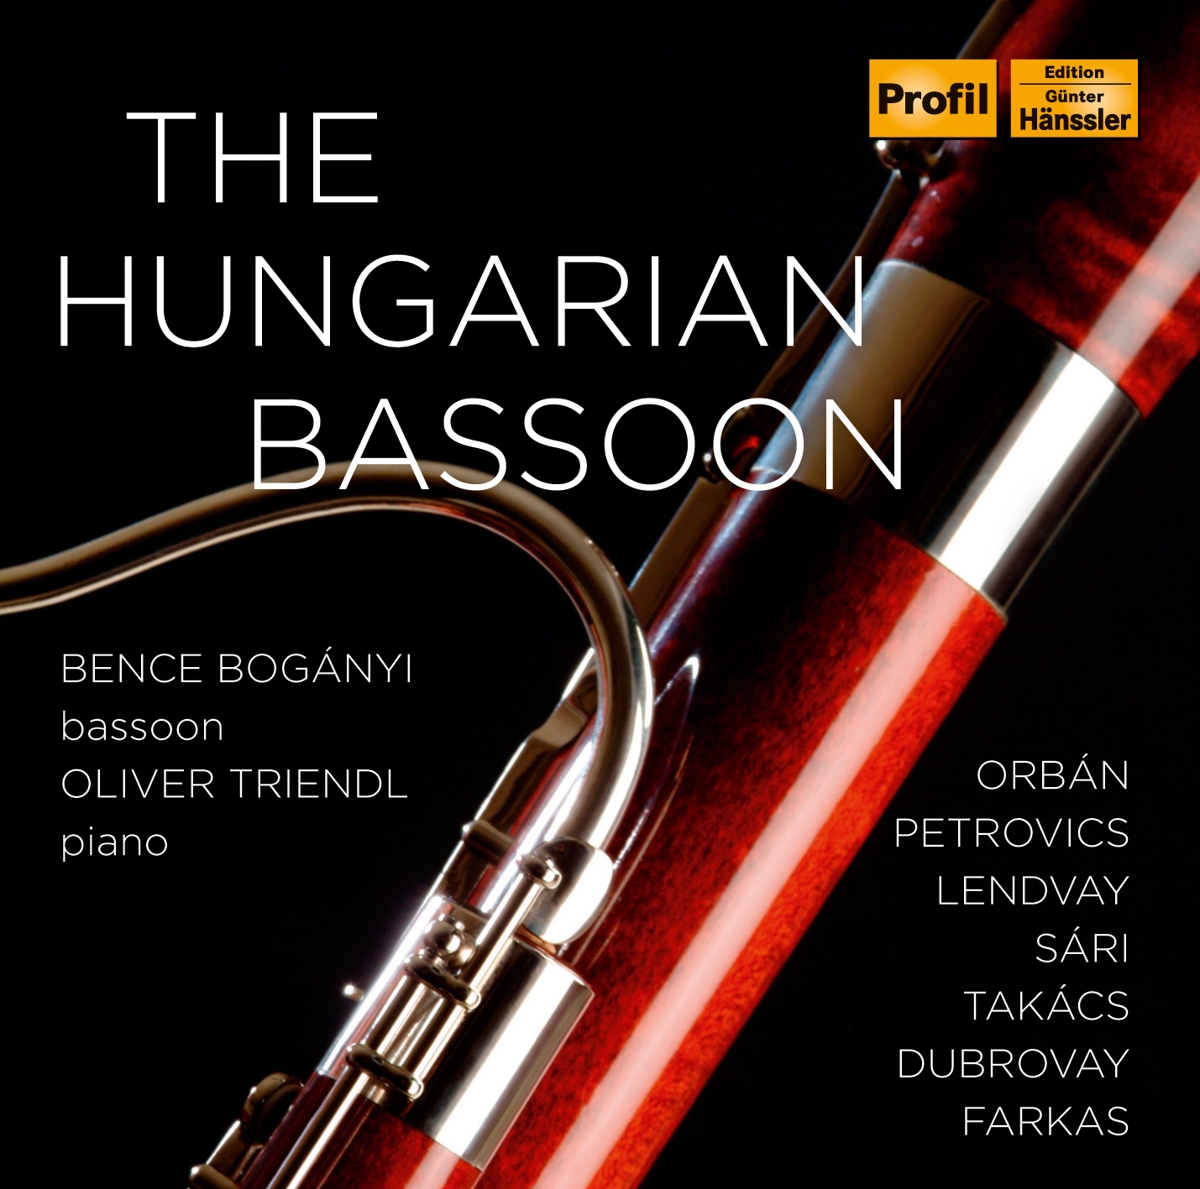 The Hungarian Bassoon